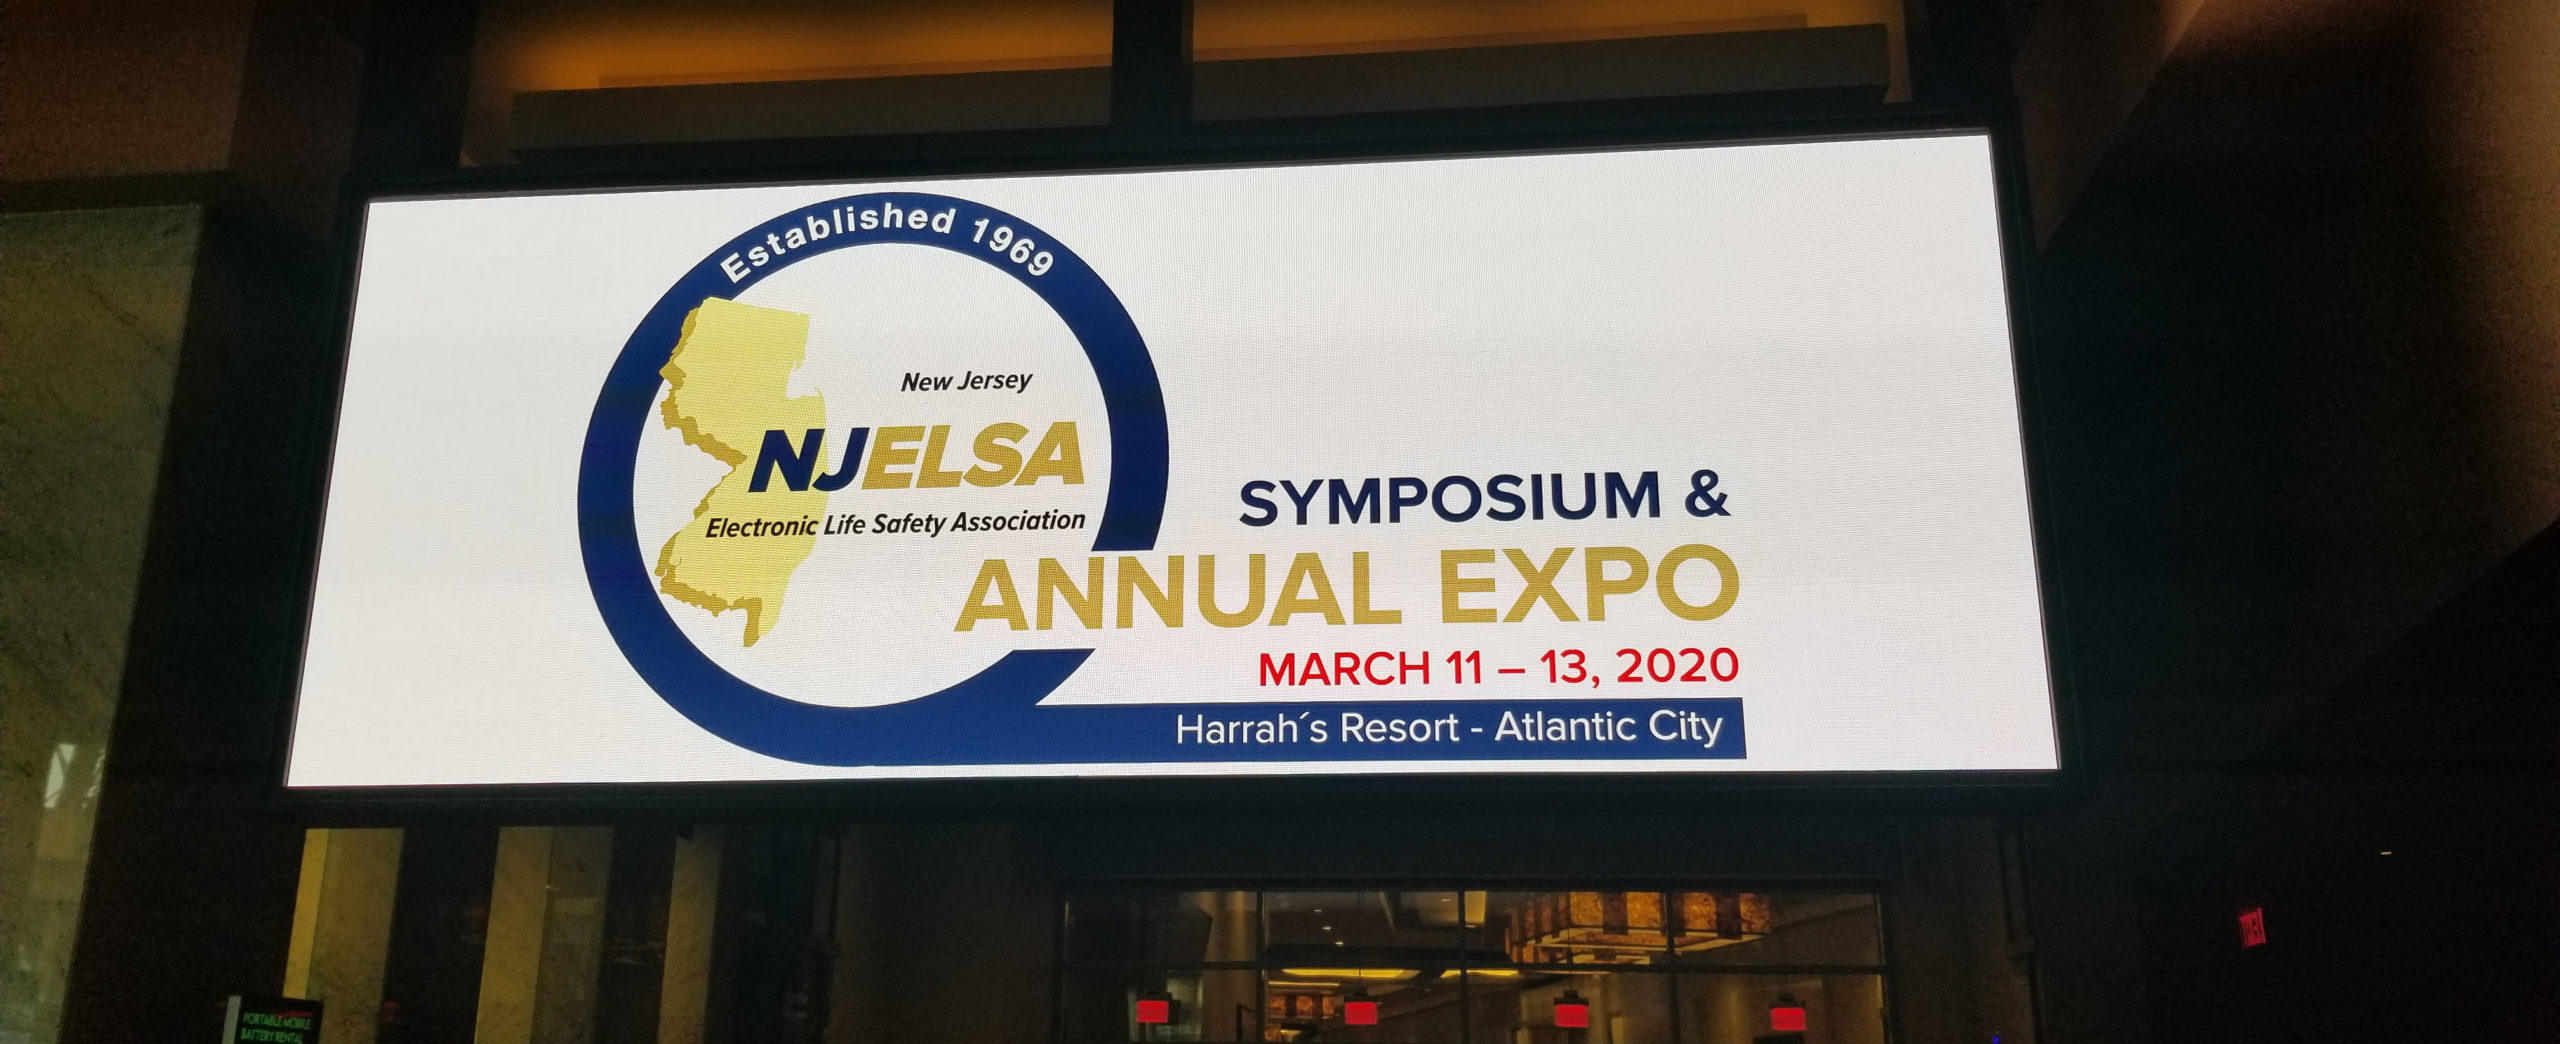 NJELSA Symposium and Tradeshow at Harrah’s Hotel and Casino in Atlantic City, NJ